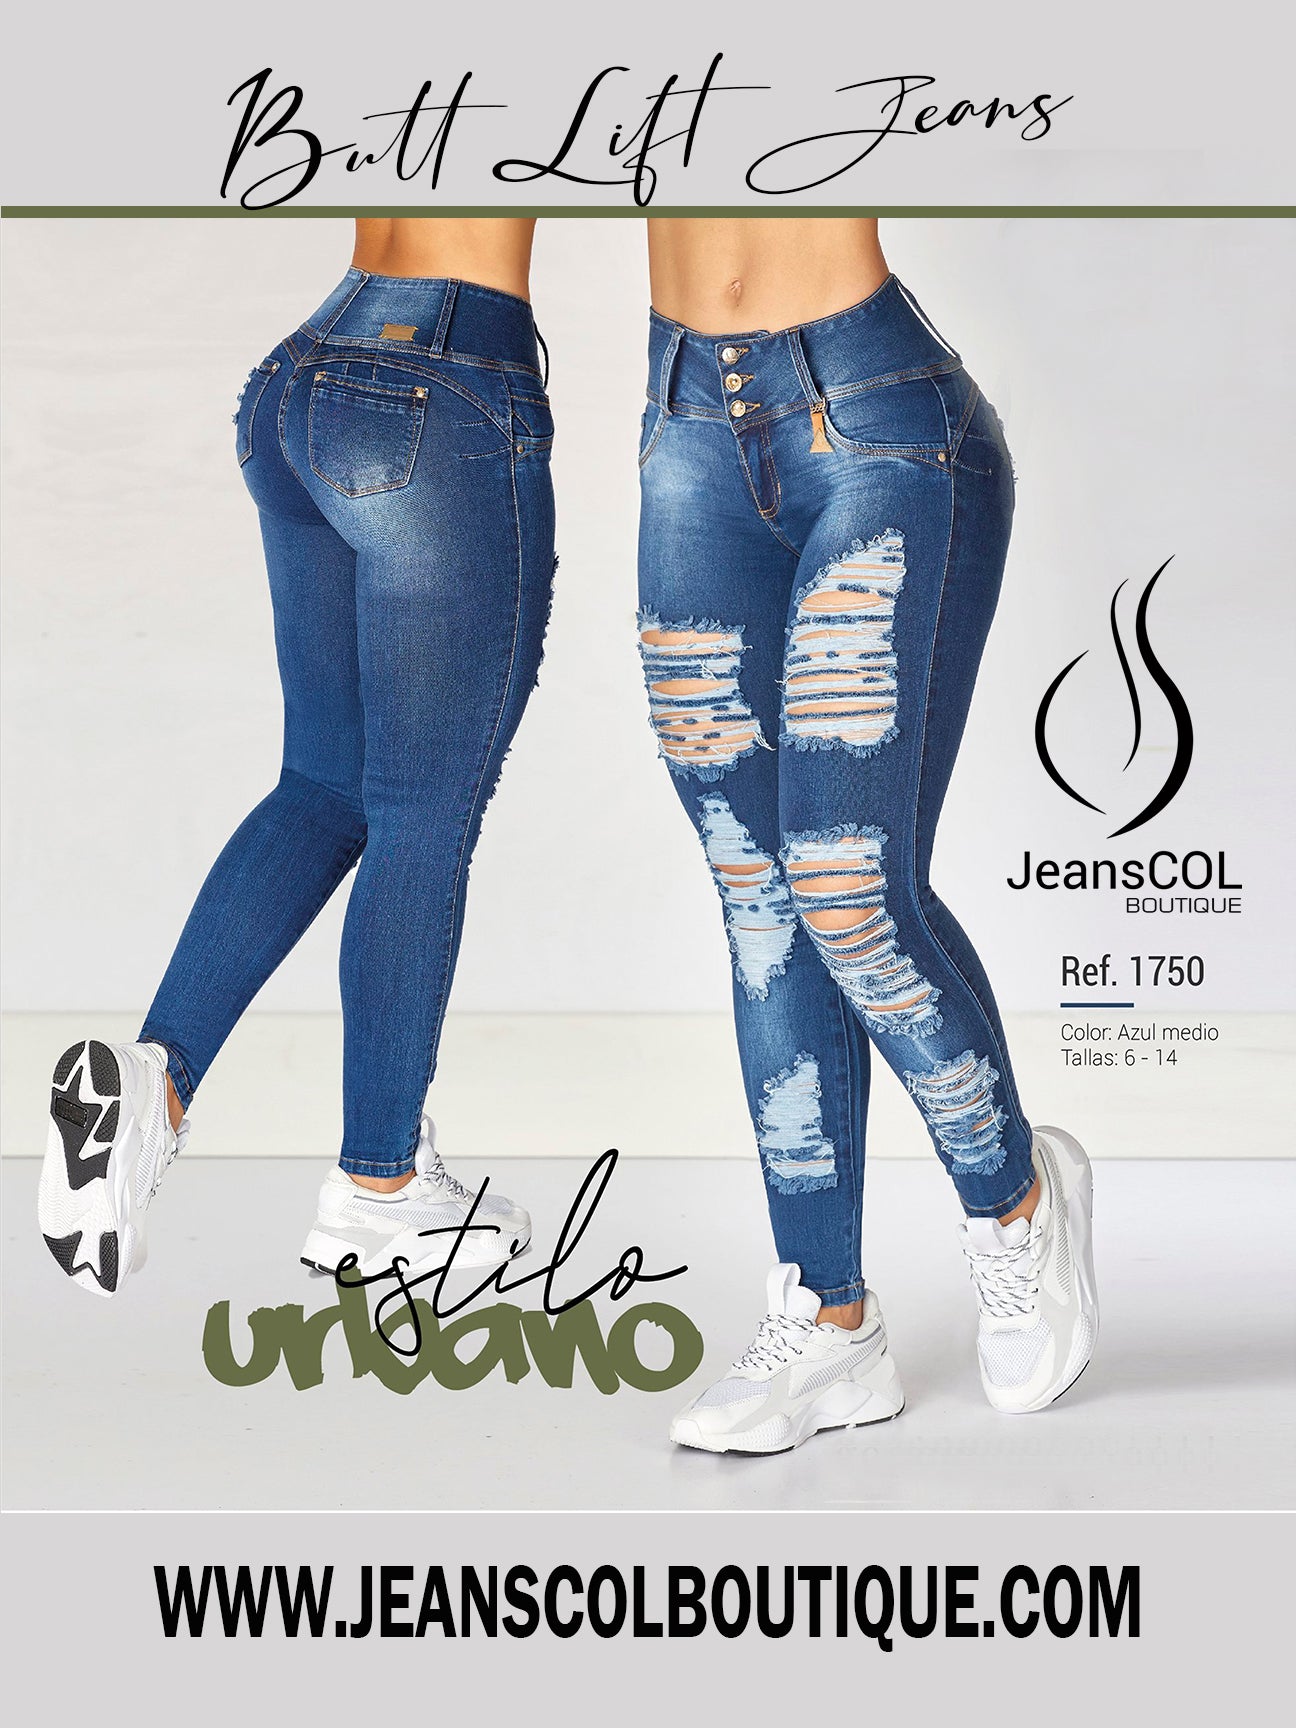 JeansCOL Boutique, Jeans Colombianos – Jeanscol Boutique